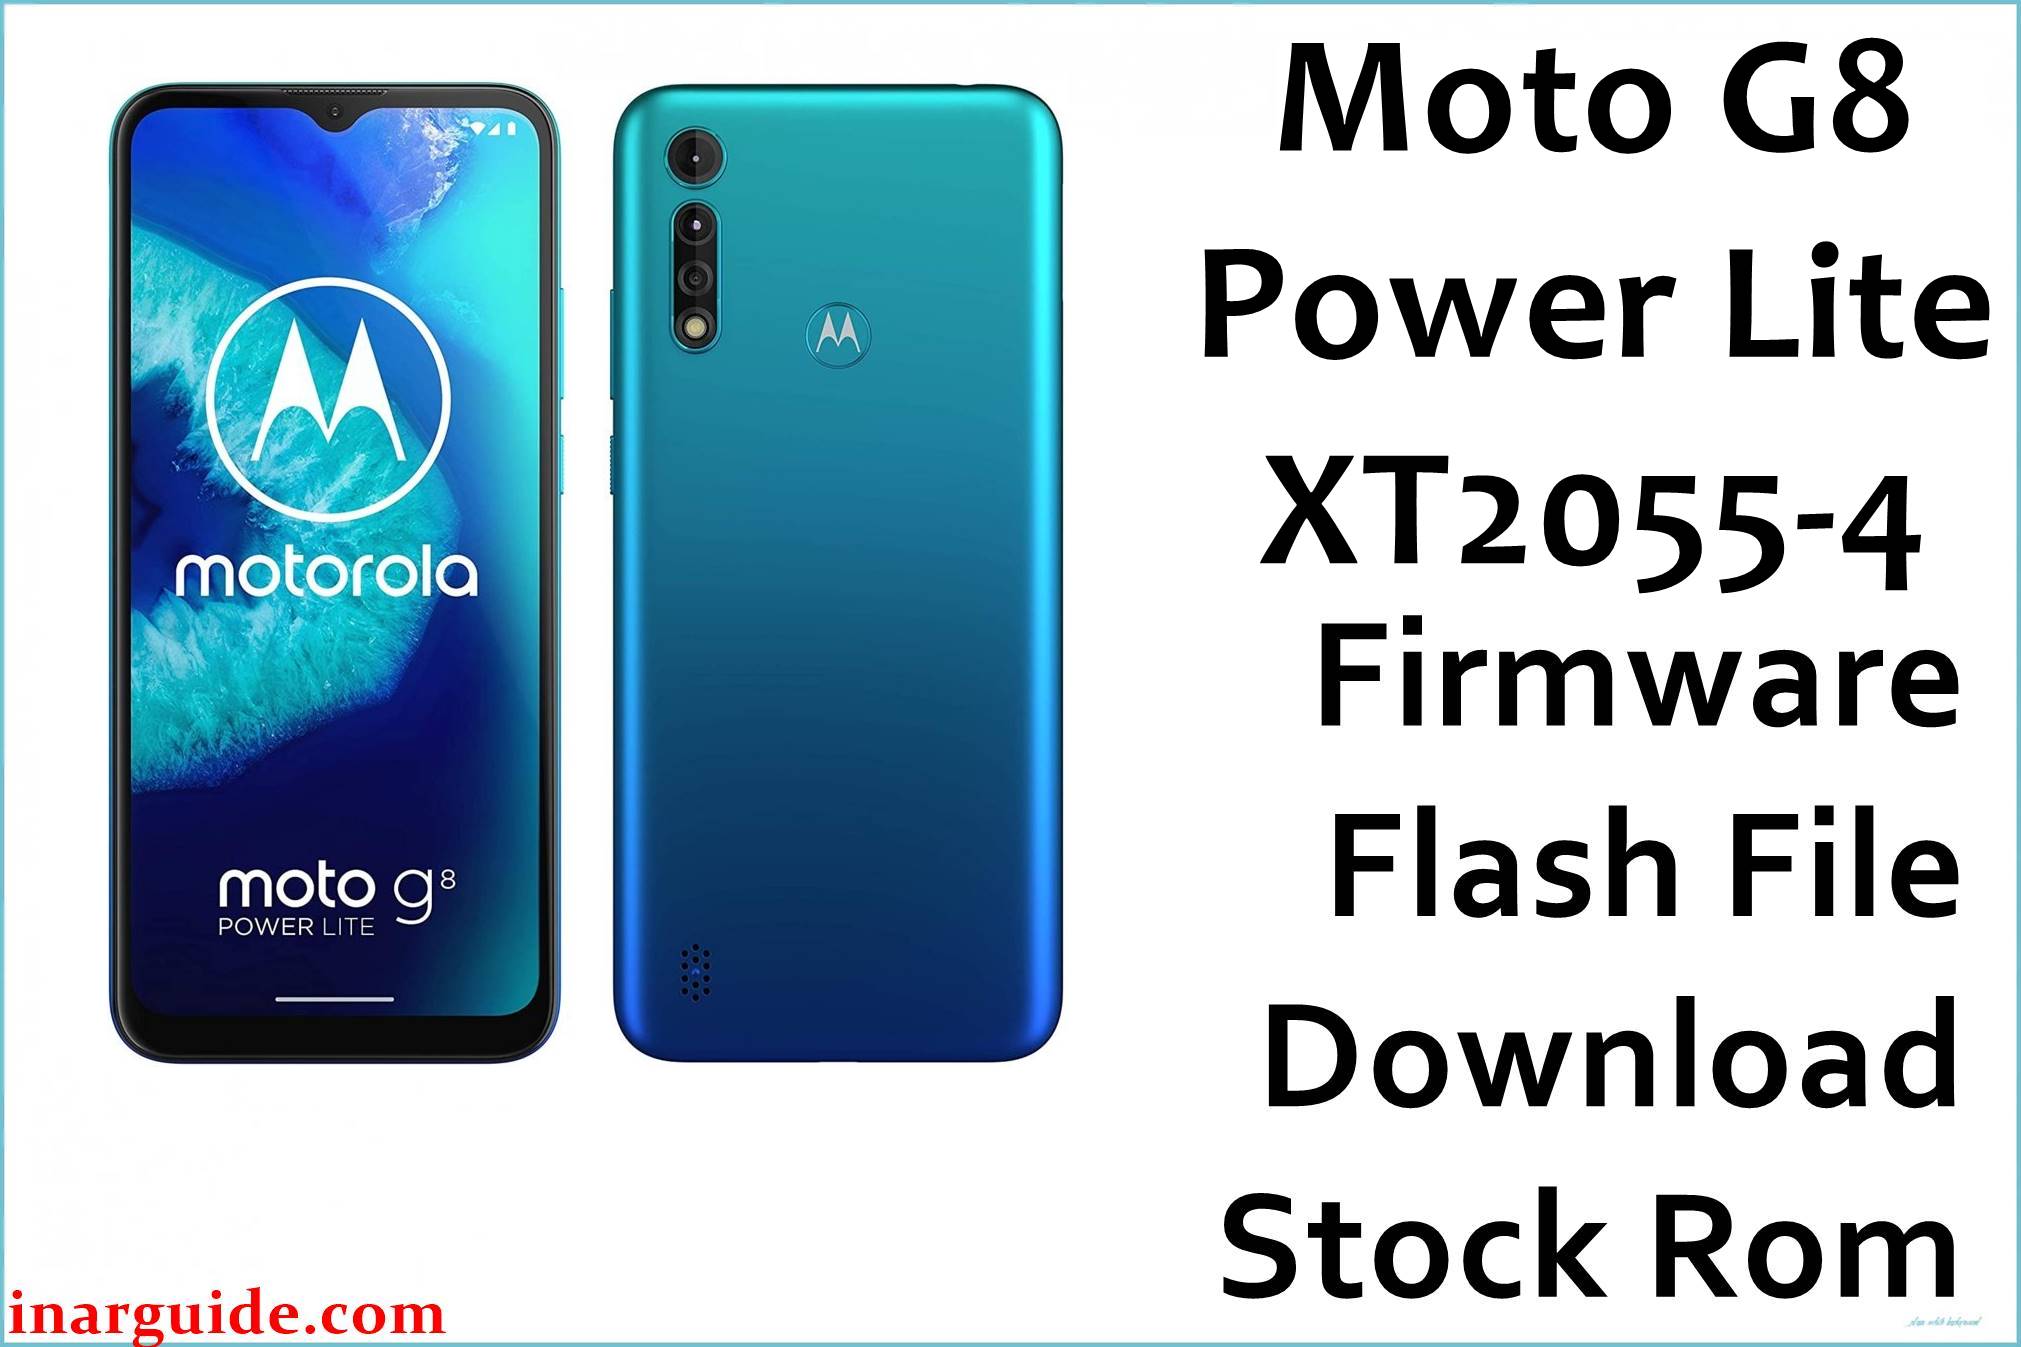 Motorola Moto G8 Power Lite XT2055-4